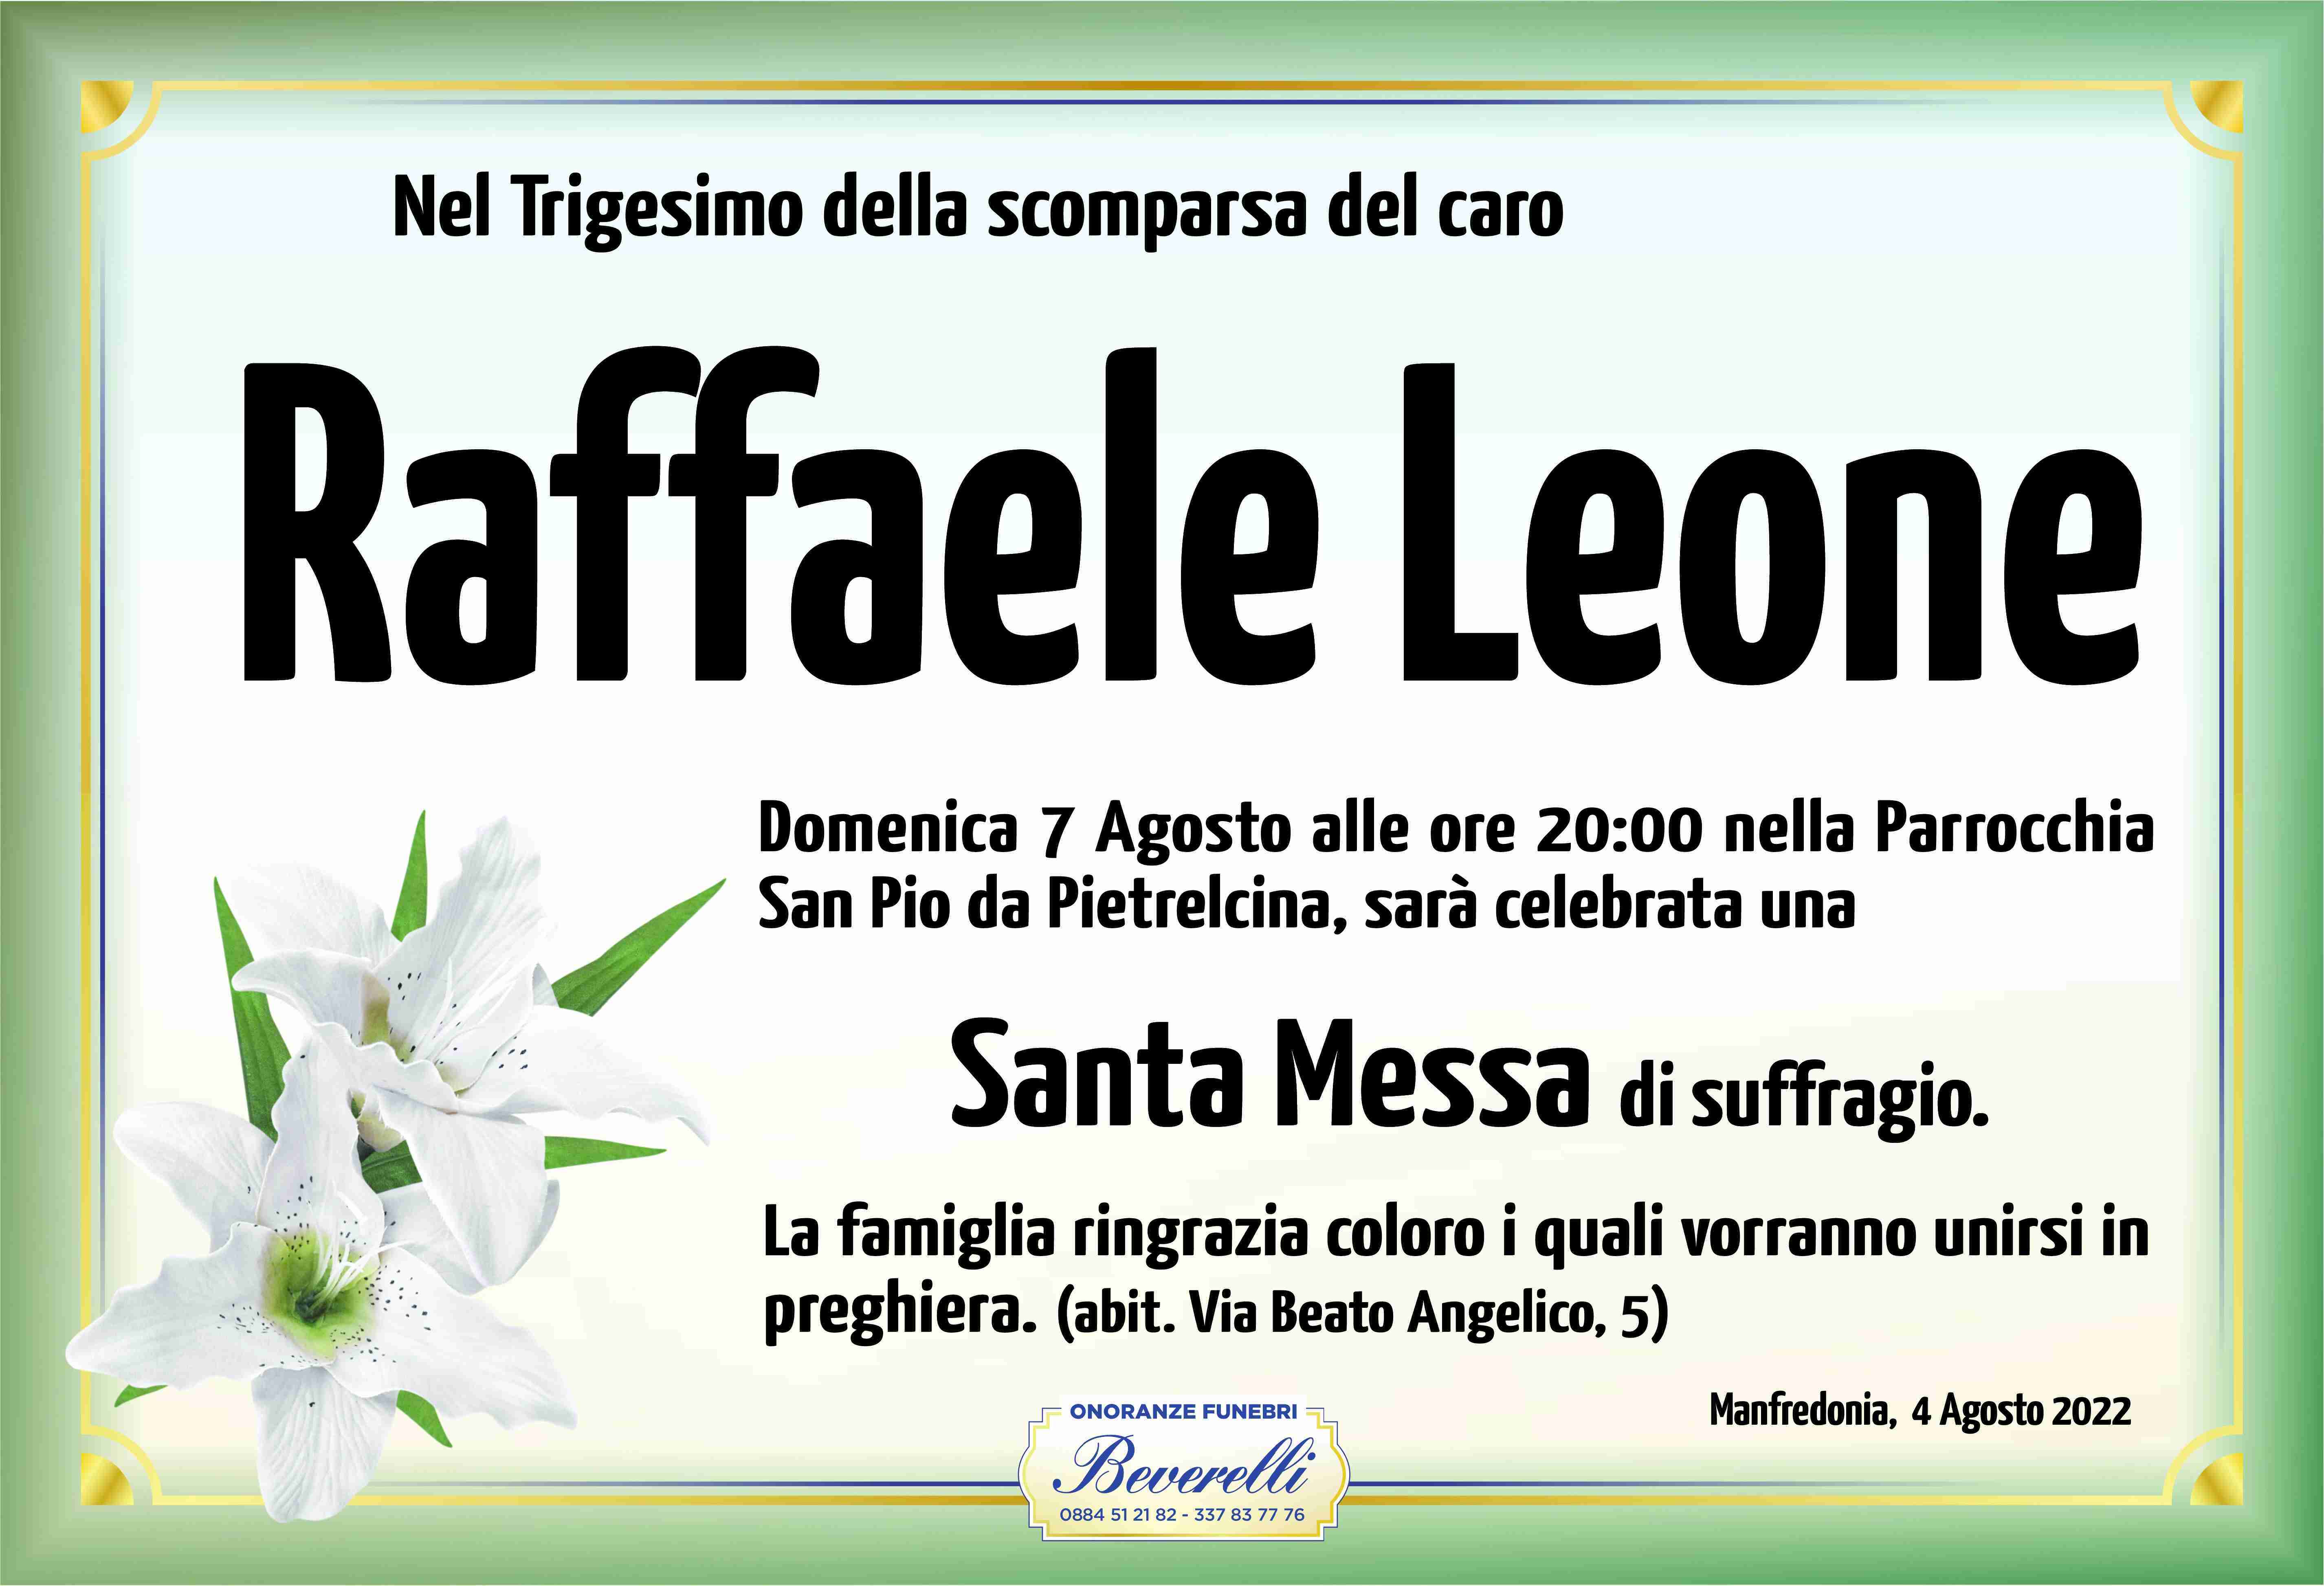 Raffaele Leone